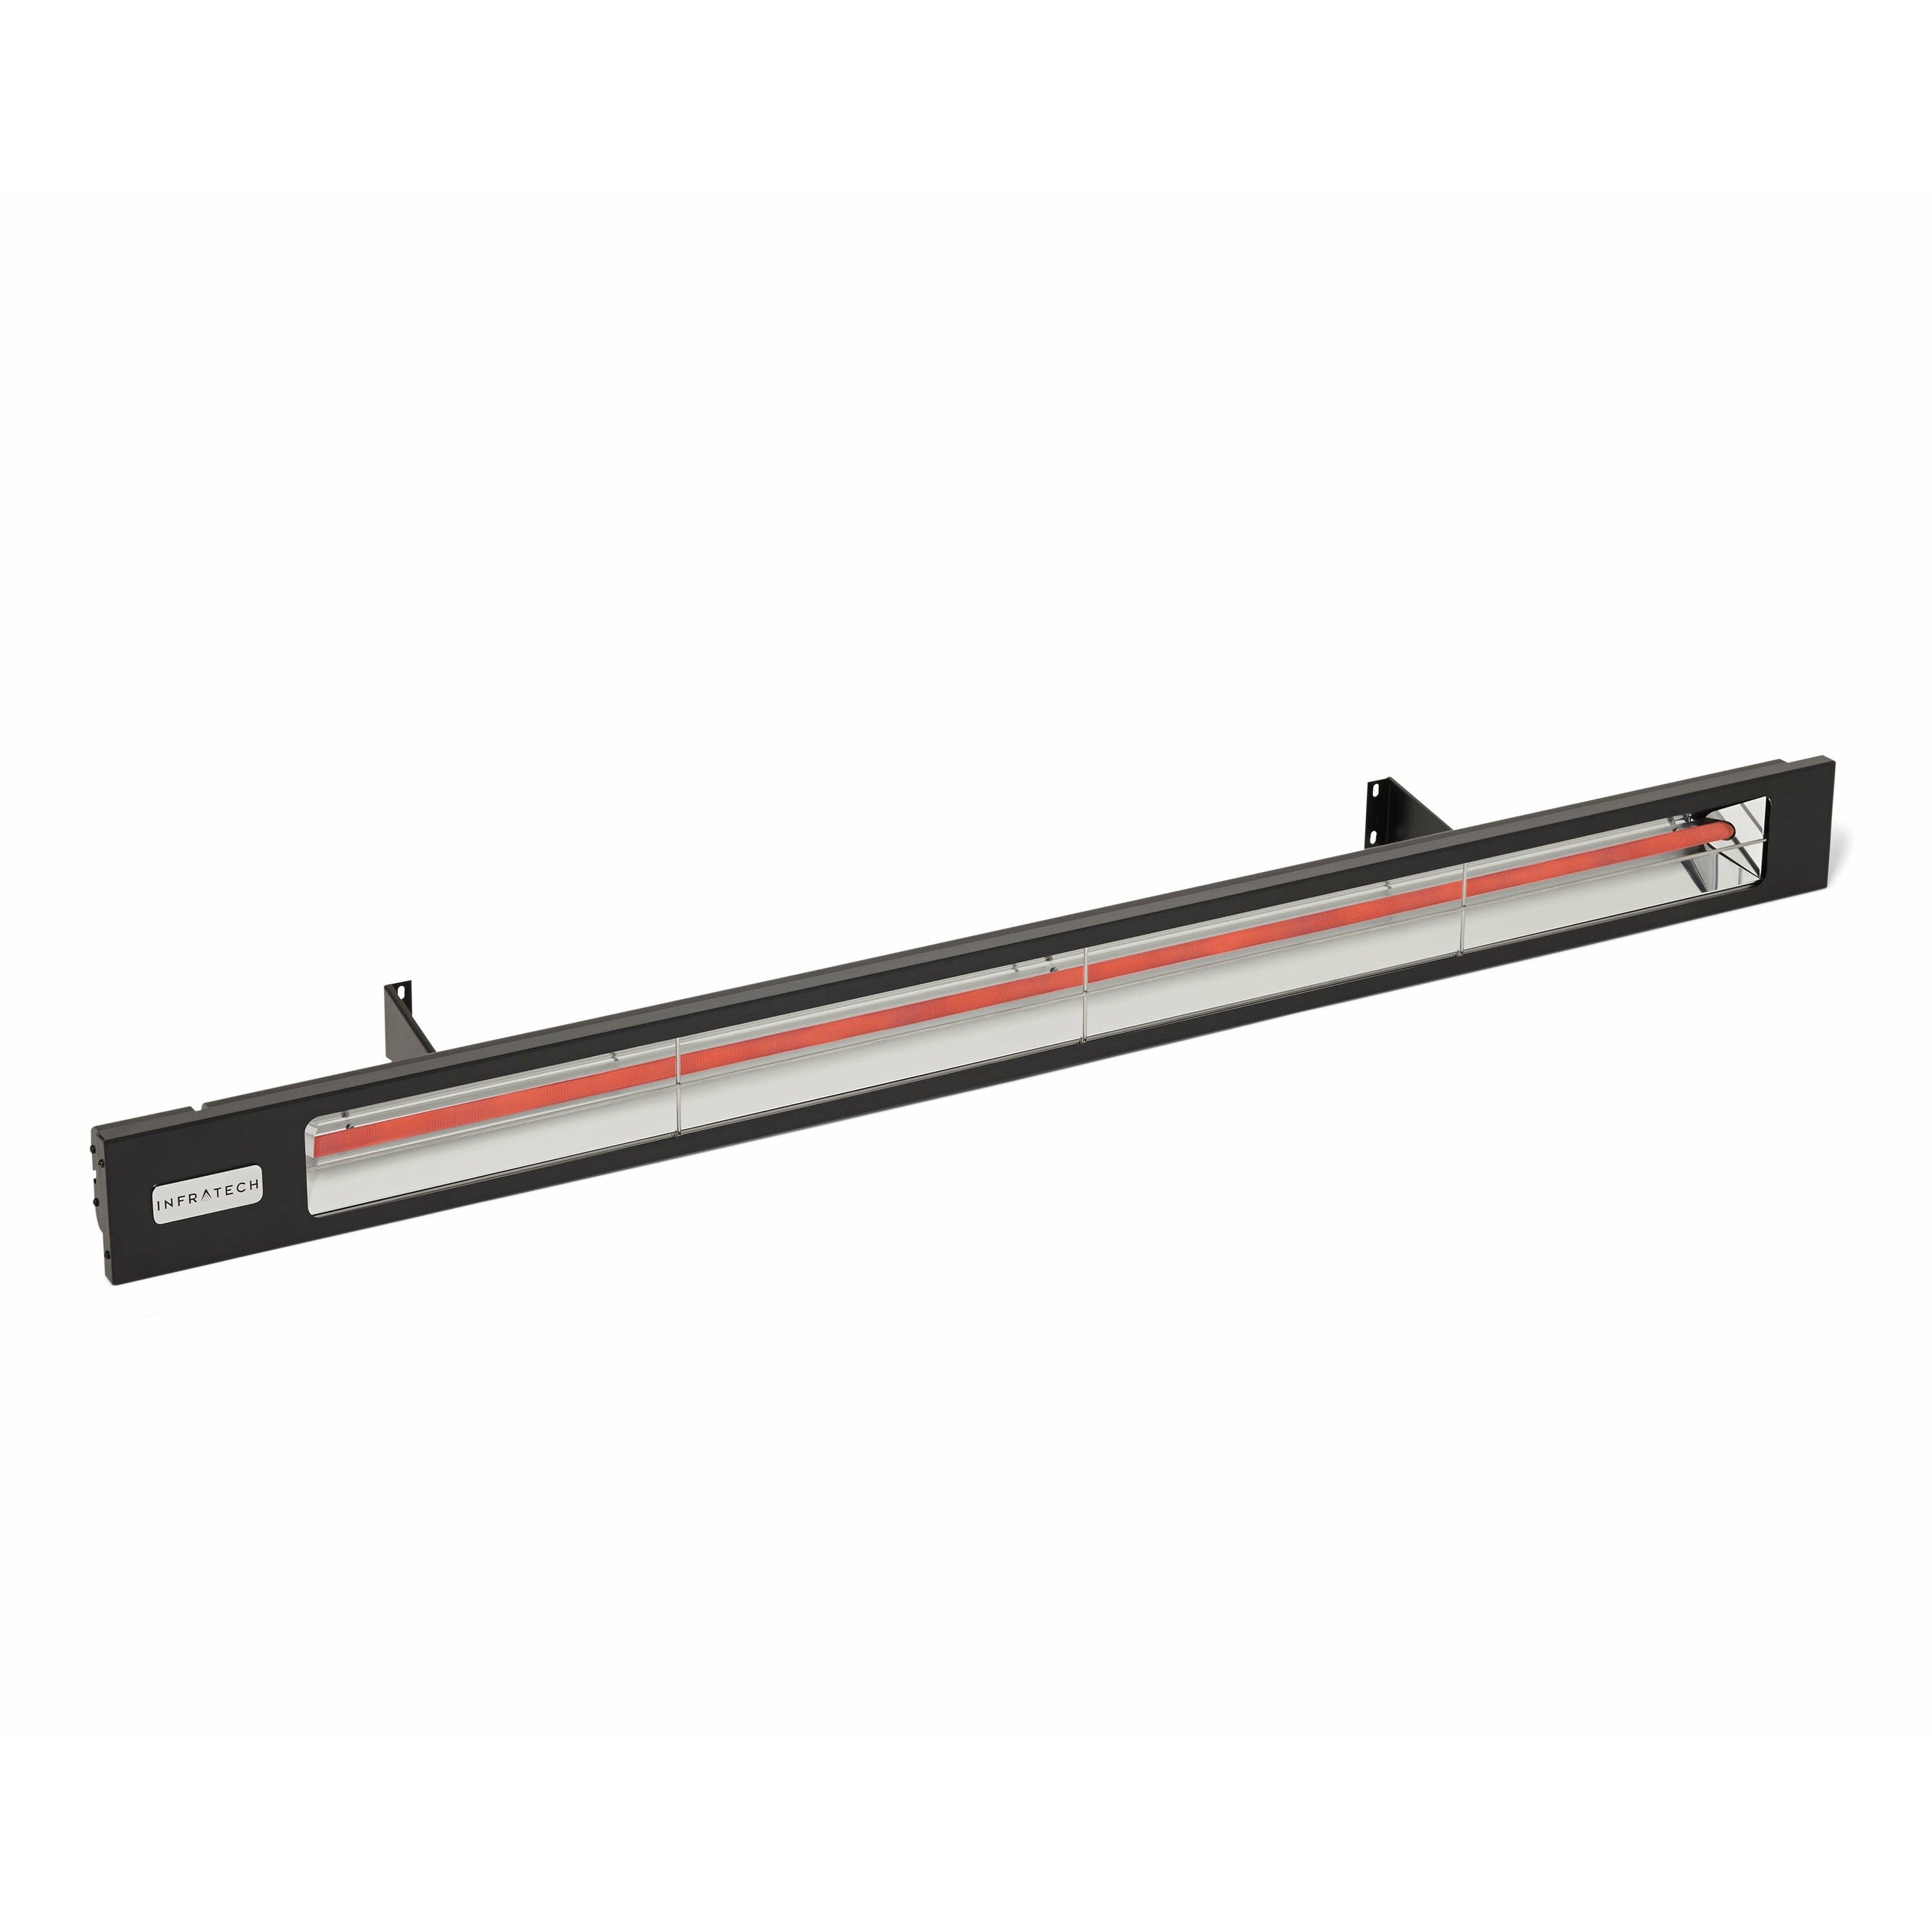 Infratech SL Series Slim Line Single Element Heaters - SL3024